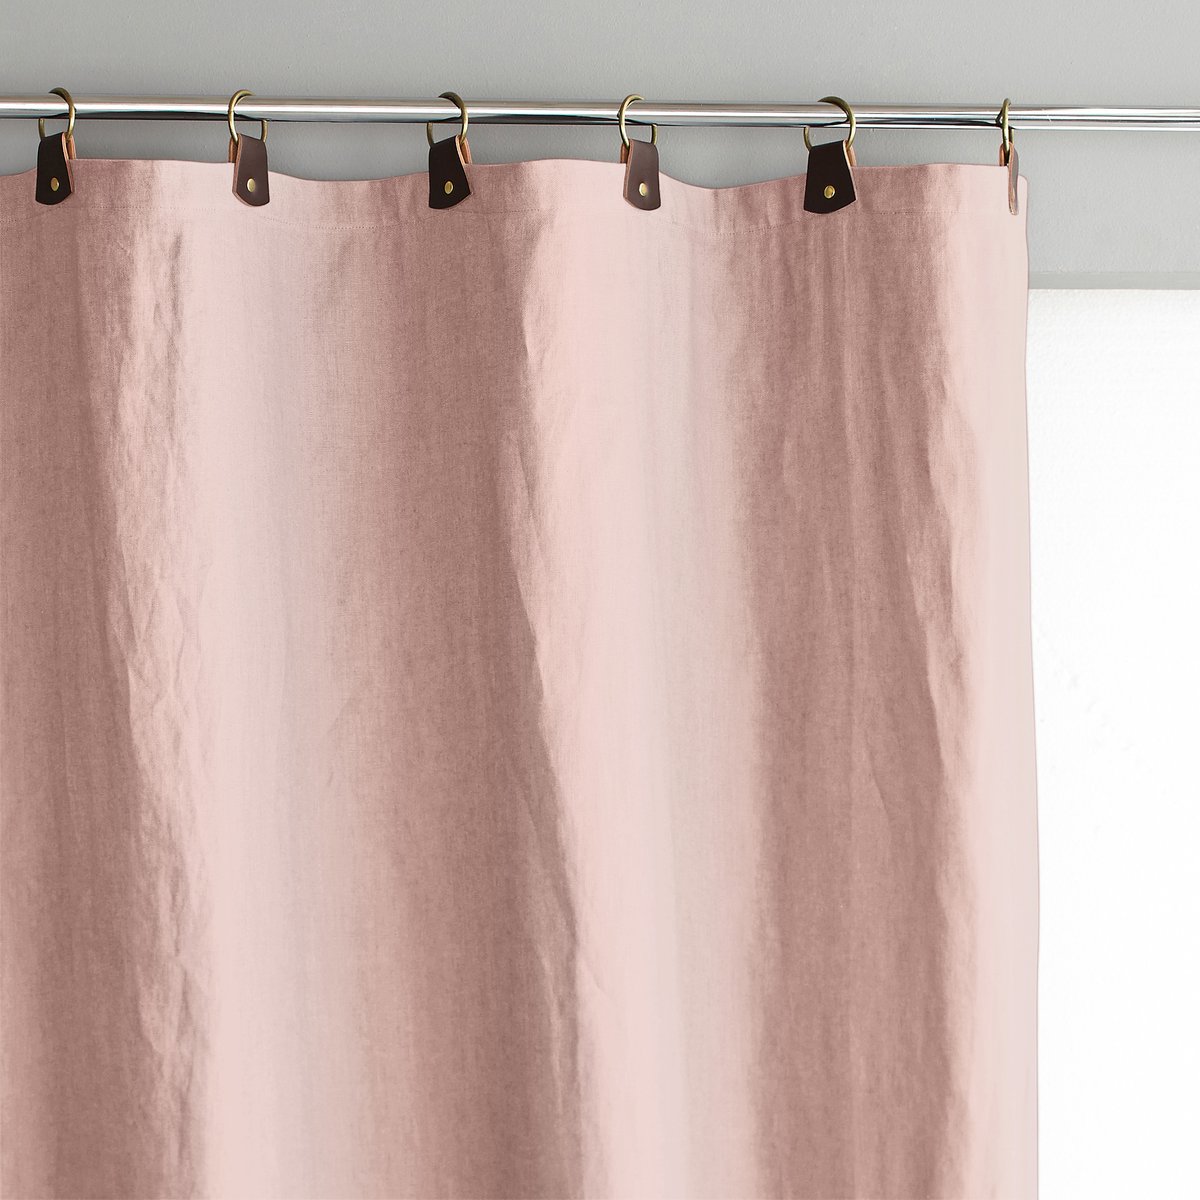 Штора La Redoute Из льна на подкладке с кожаными шлевками Private 140 x 180 см розовый, размер 140 x 180 см